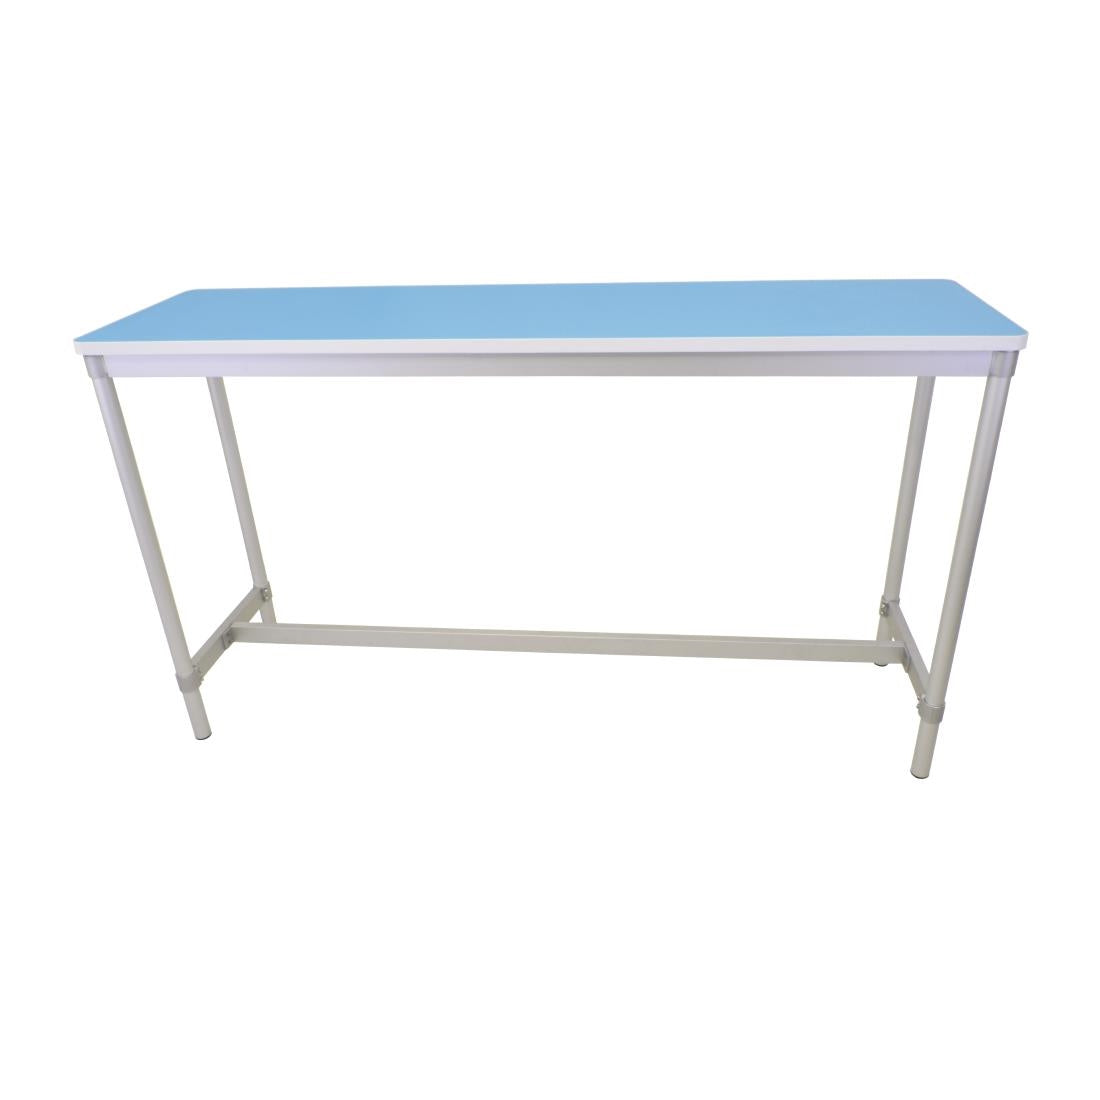 DG131-PB Gopak Enviro Indoor Pastel Blue Rectangle Poseur Table 1200mm JD Catering Equipment Solutions Ltd